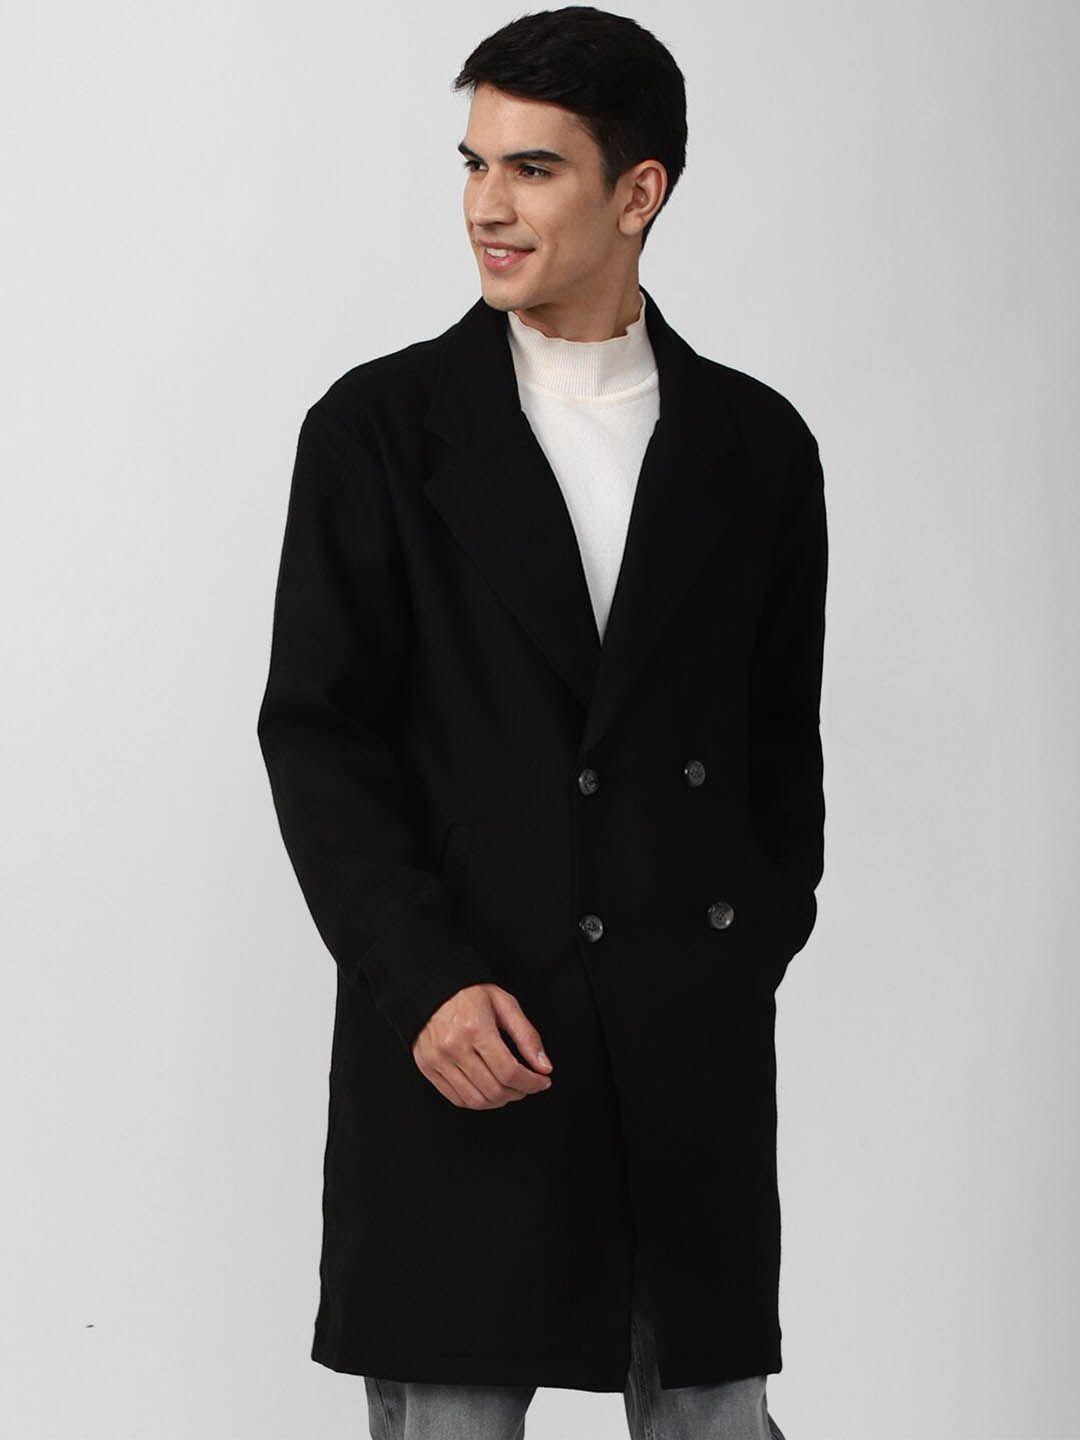 forever-21-men-black-longline-tailored-jacket